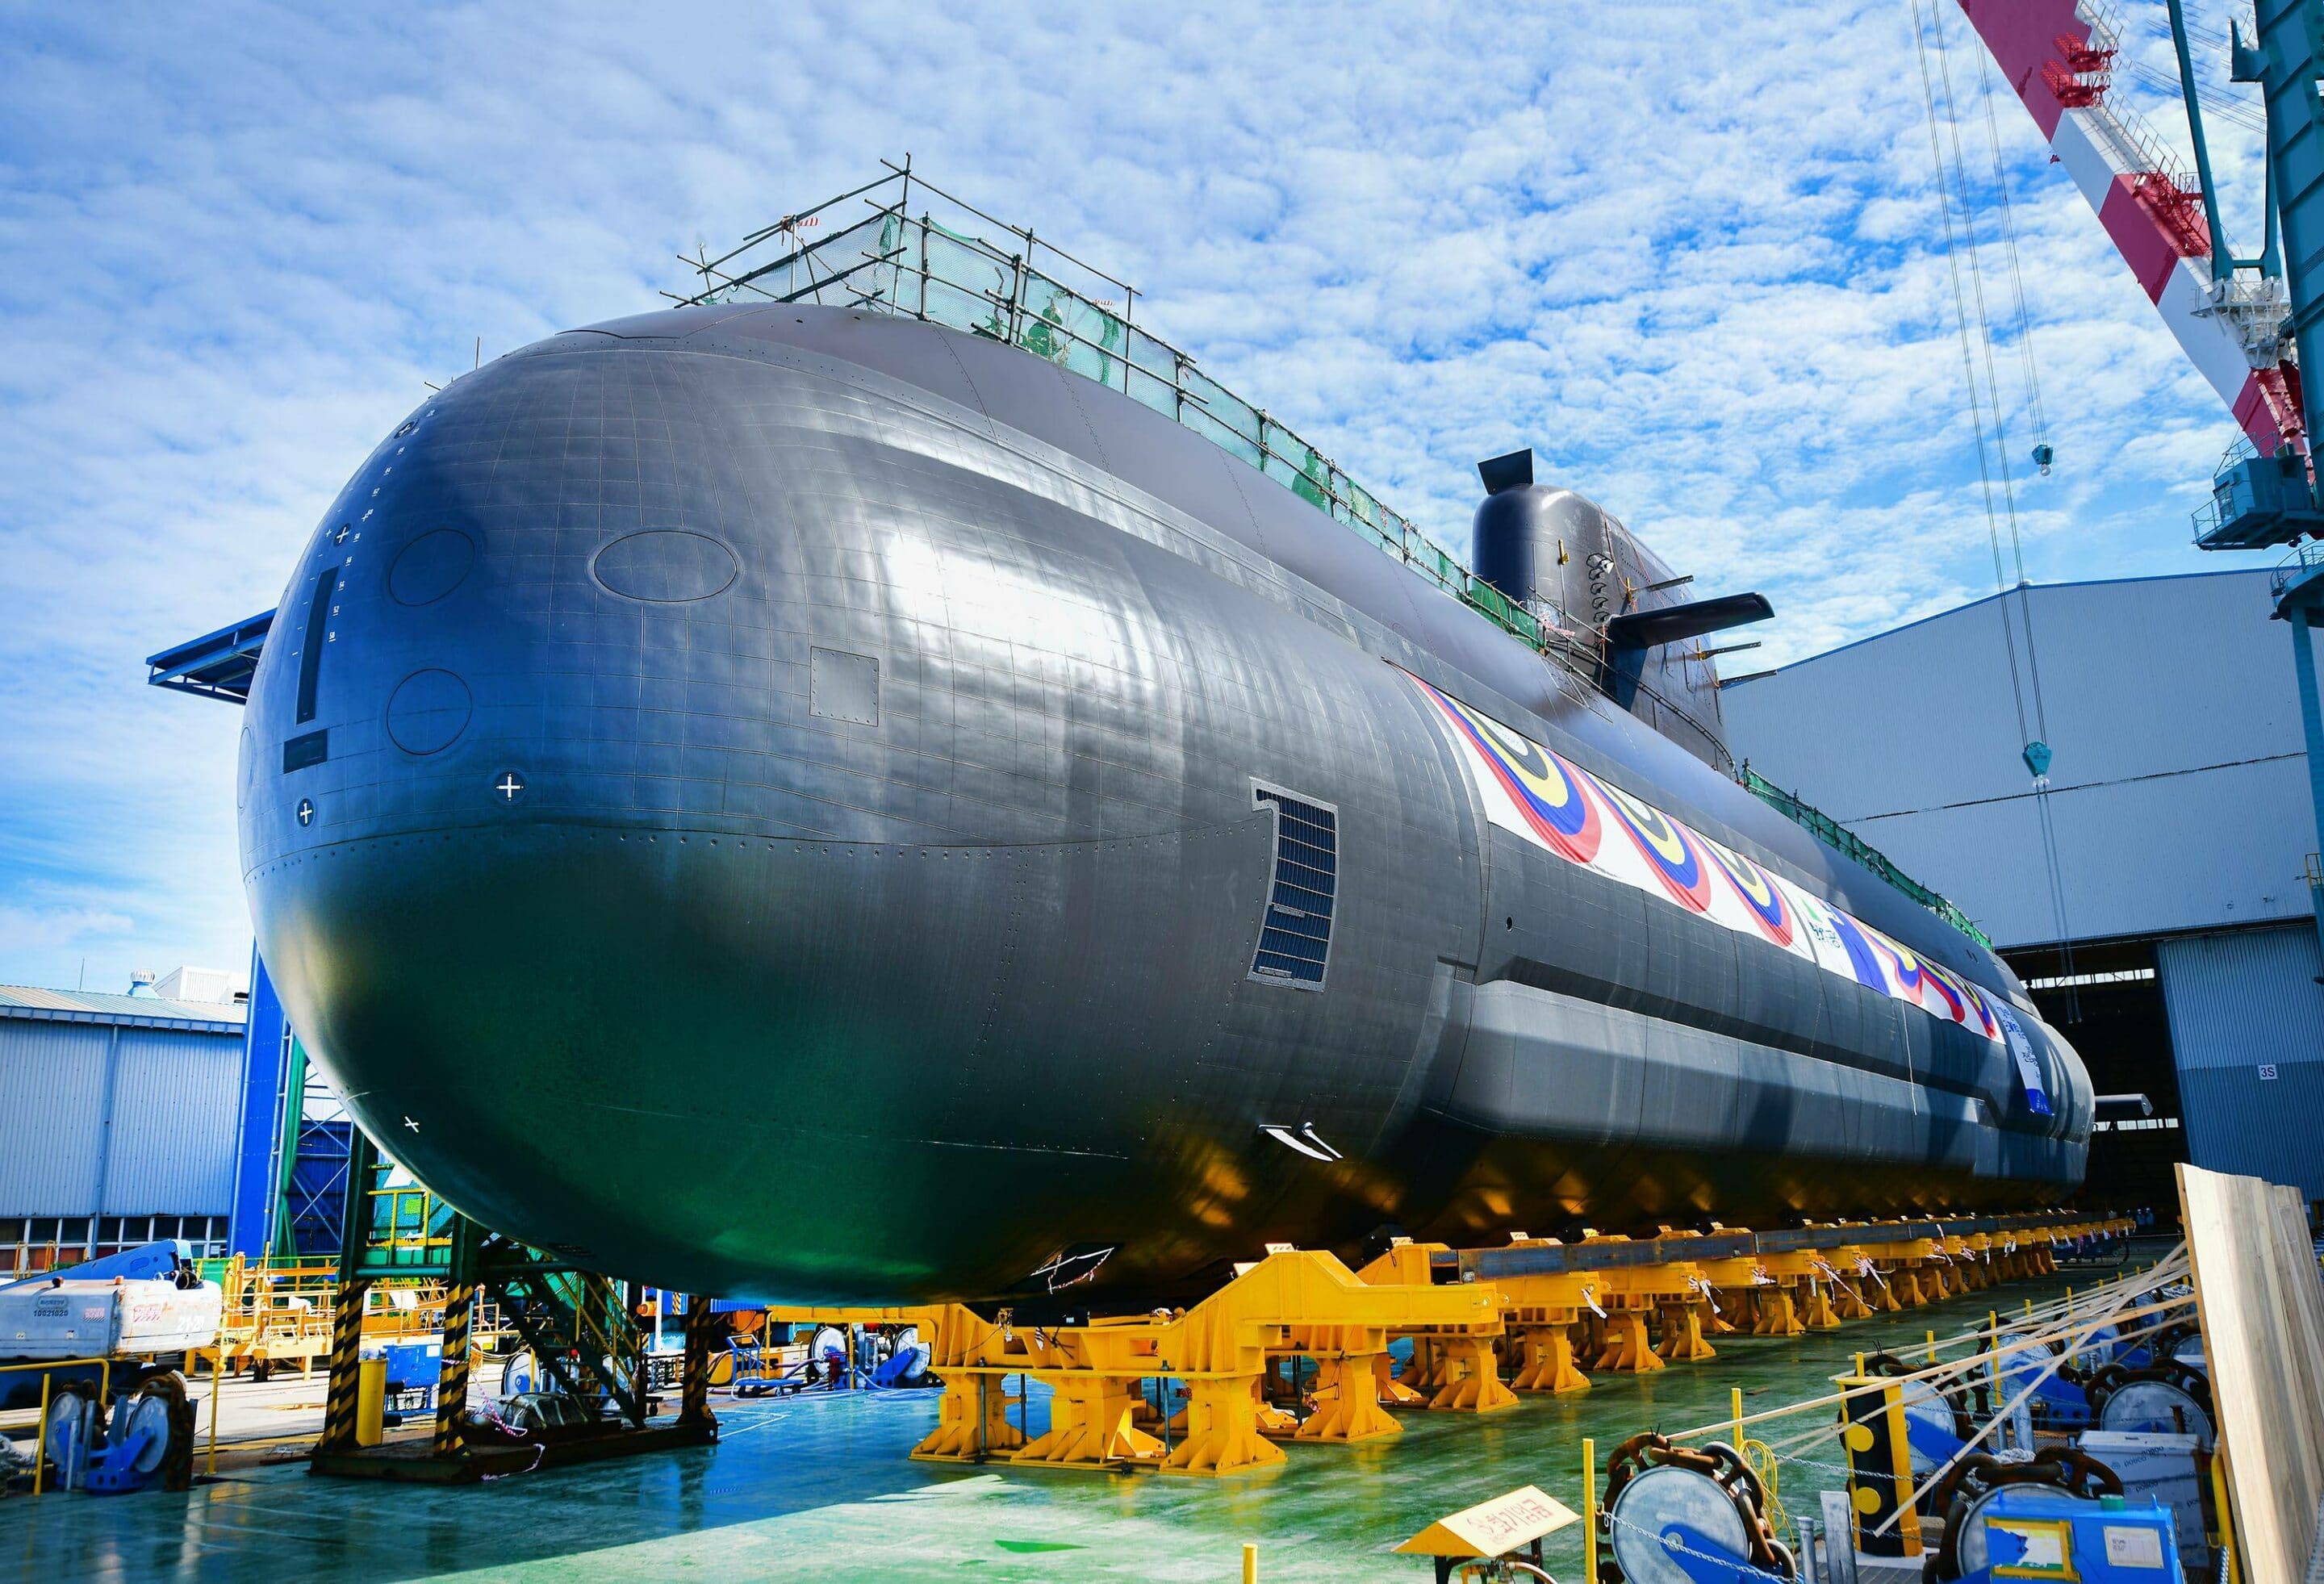 Le sous-marin sud-coréen Shin Chae-ho, lancé en 2021
C: Yonhap News/NEWSCOM/SIPA